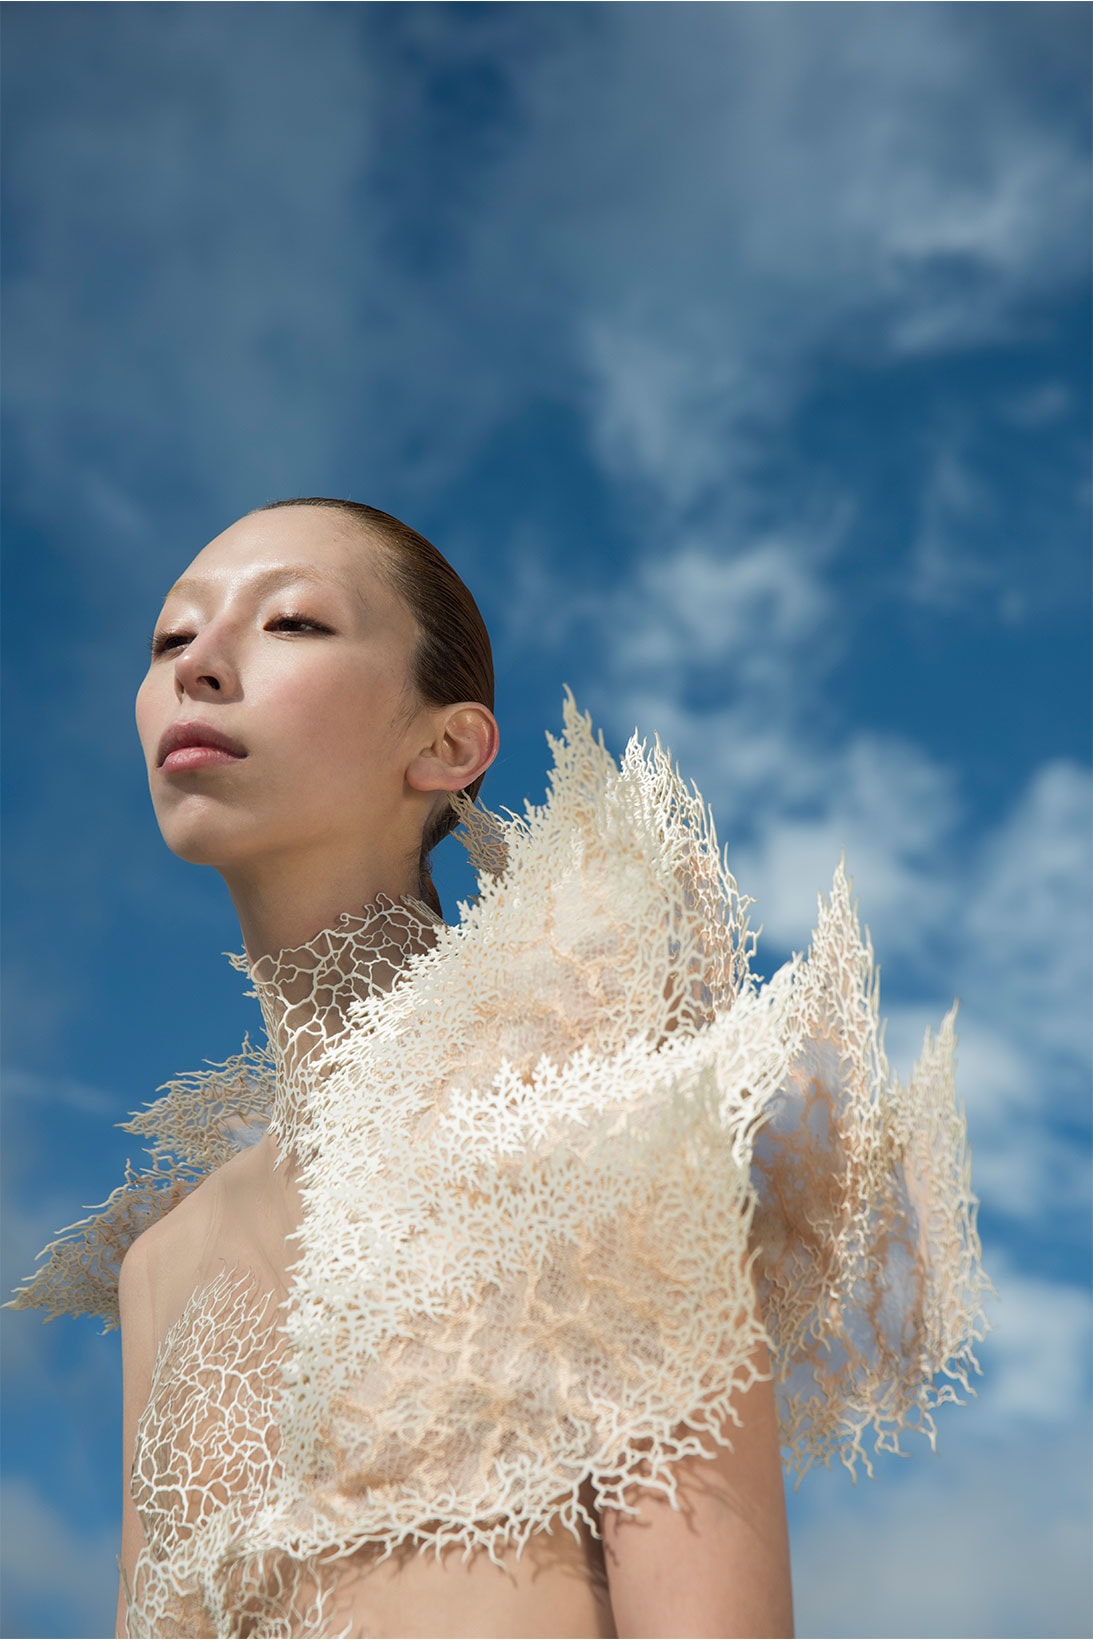 parley iris van herpen earthrise haute couture collaboration dress sky